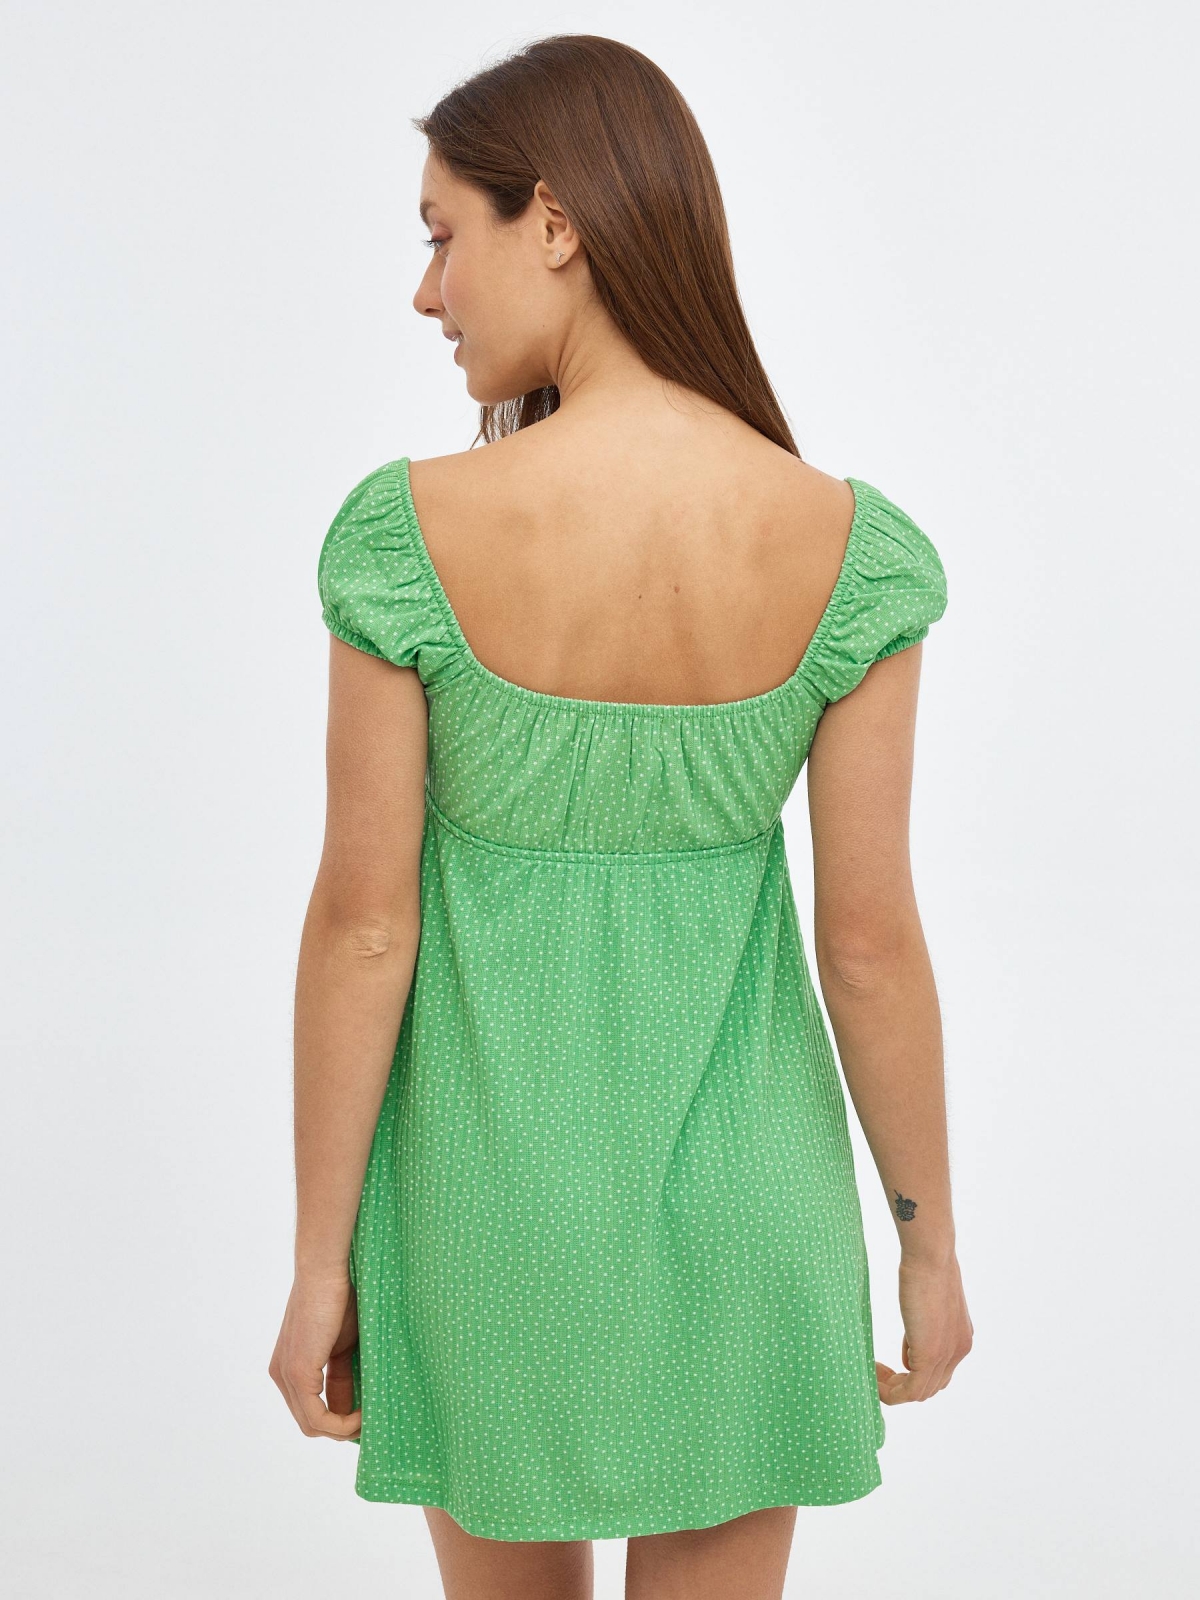 Vestido Polka dot mini print verde vista meia traseira